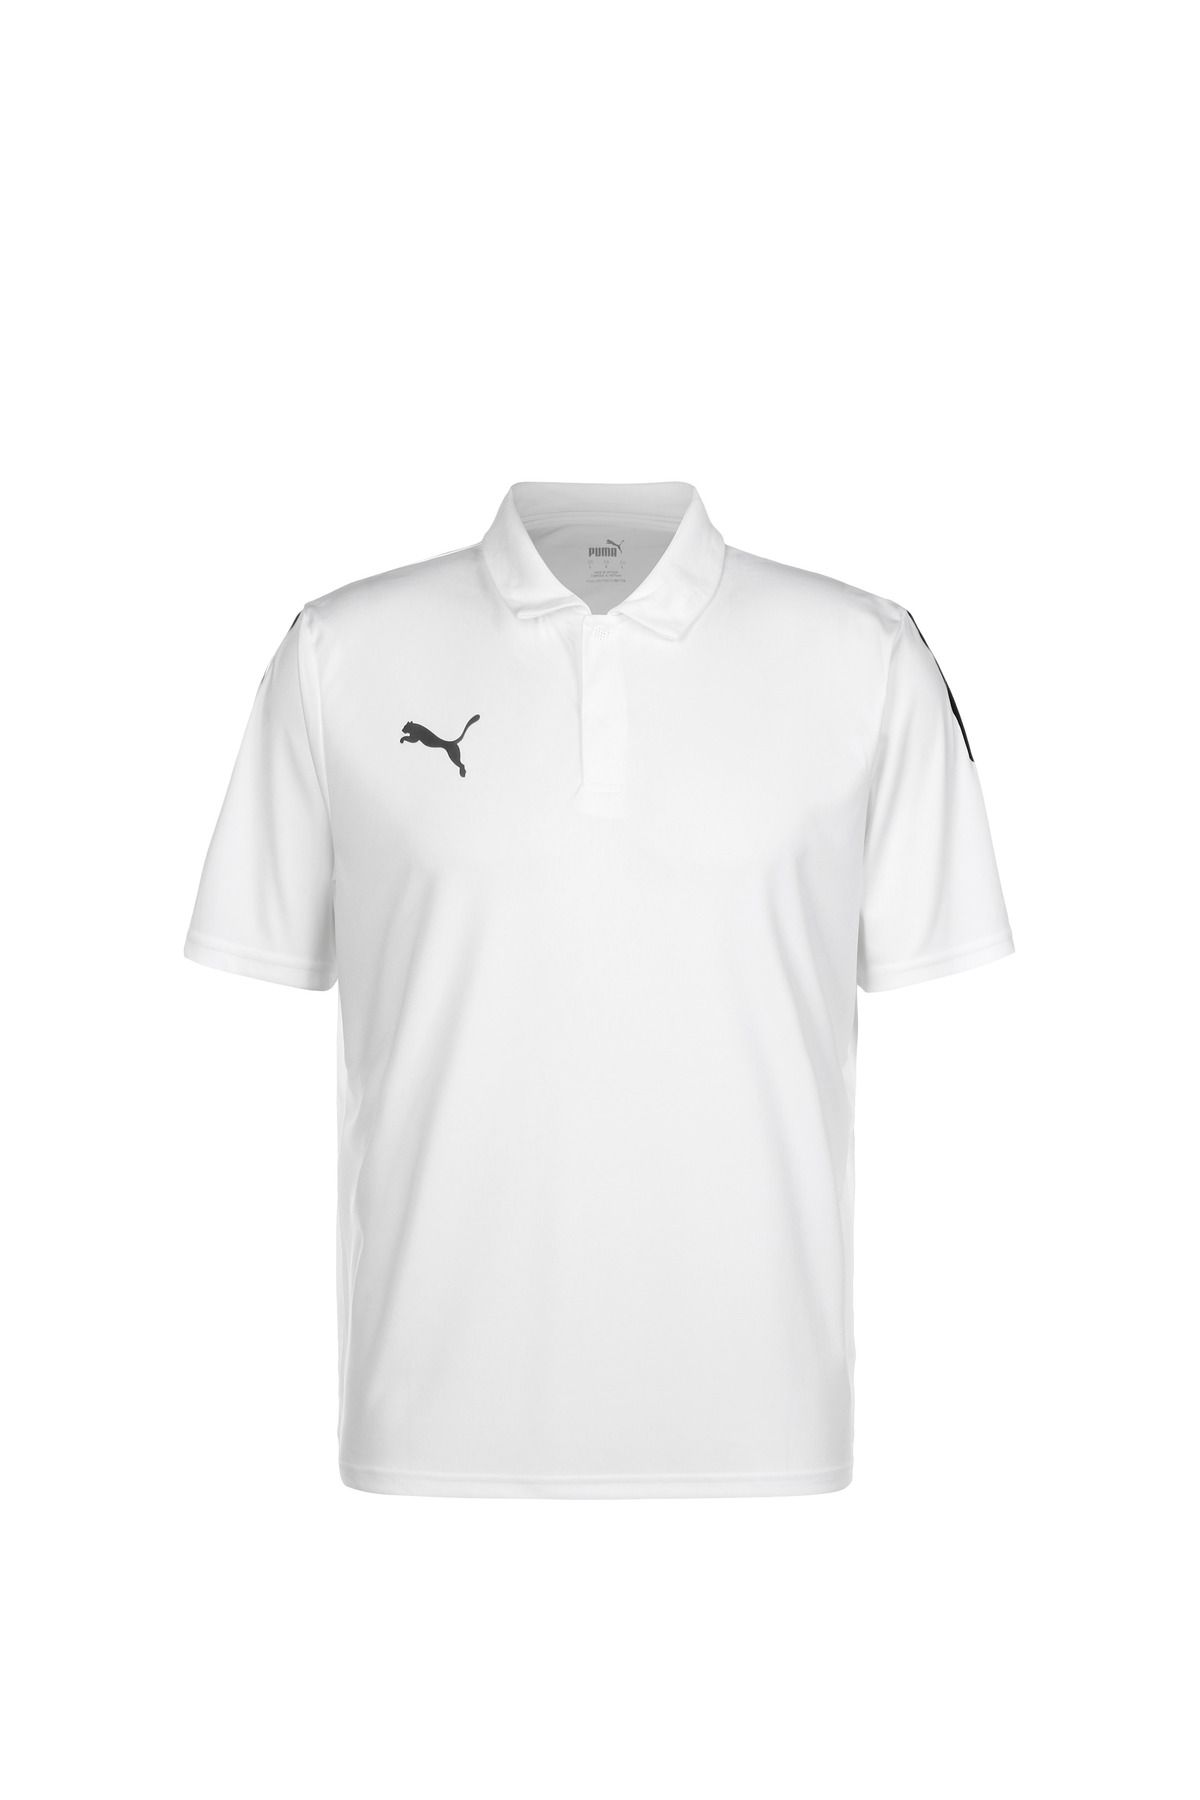 Puma Poloshirt Fit Trendyol - Weiß - Regular 